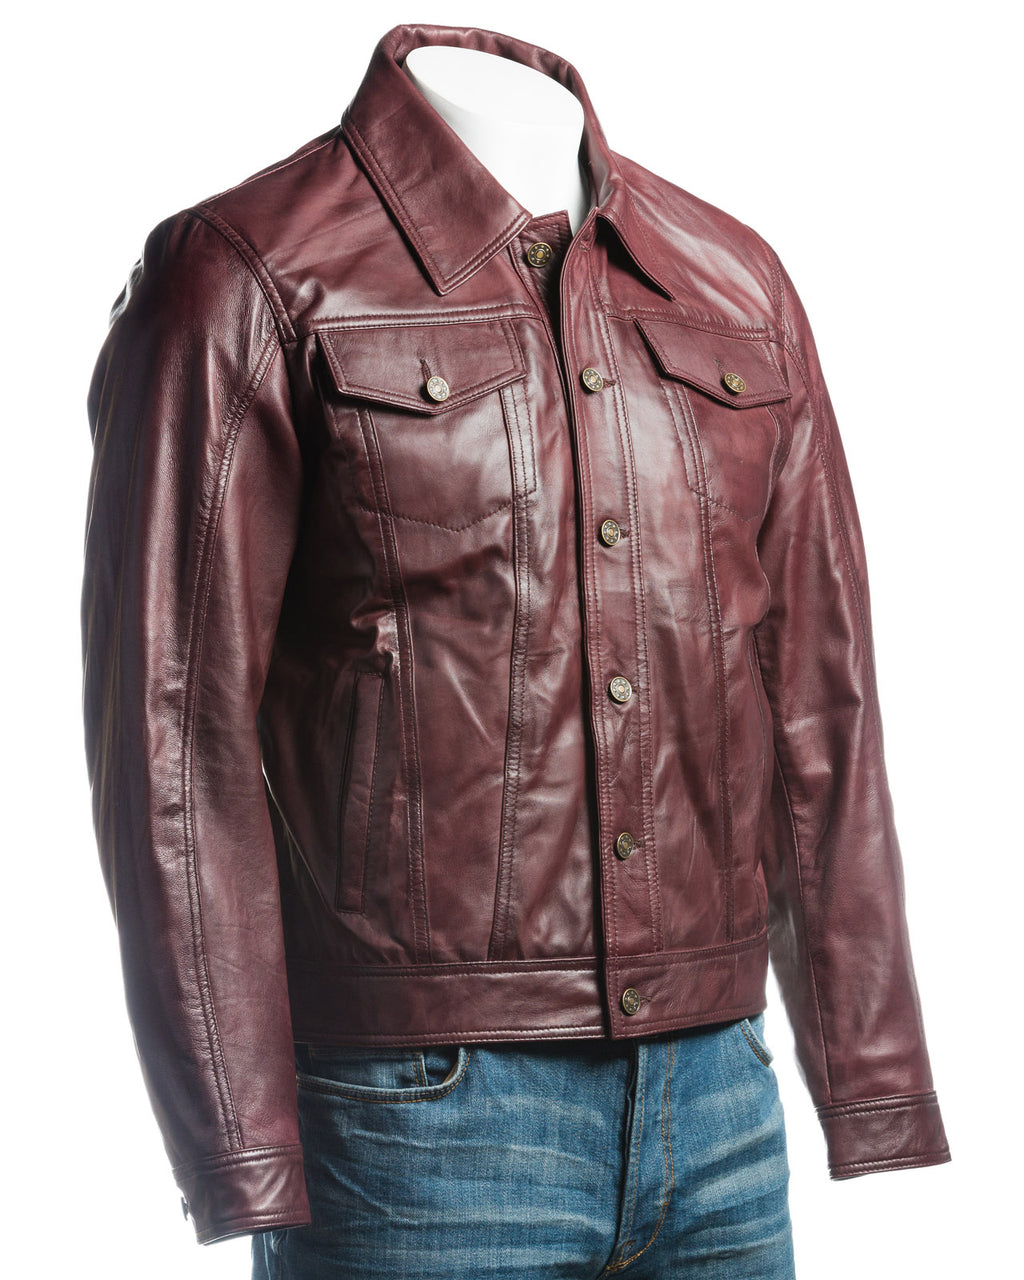 Men's Burgundy Denim Shirt Style Leather Jacket: Antonio